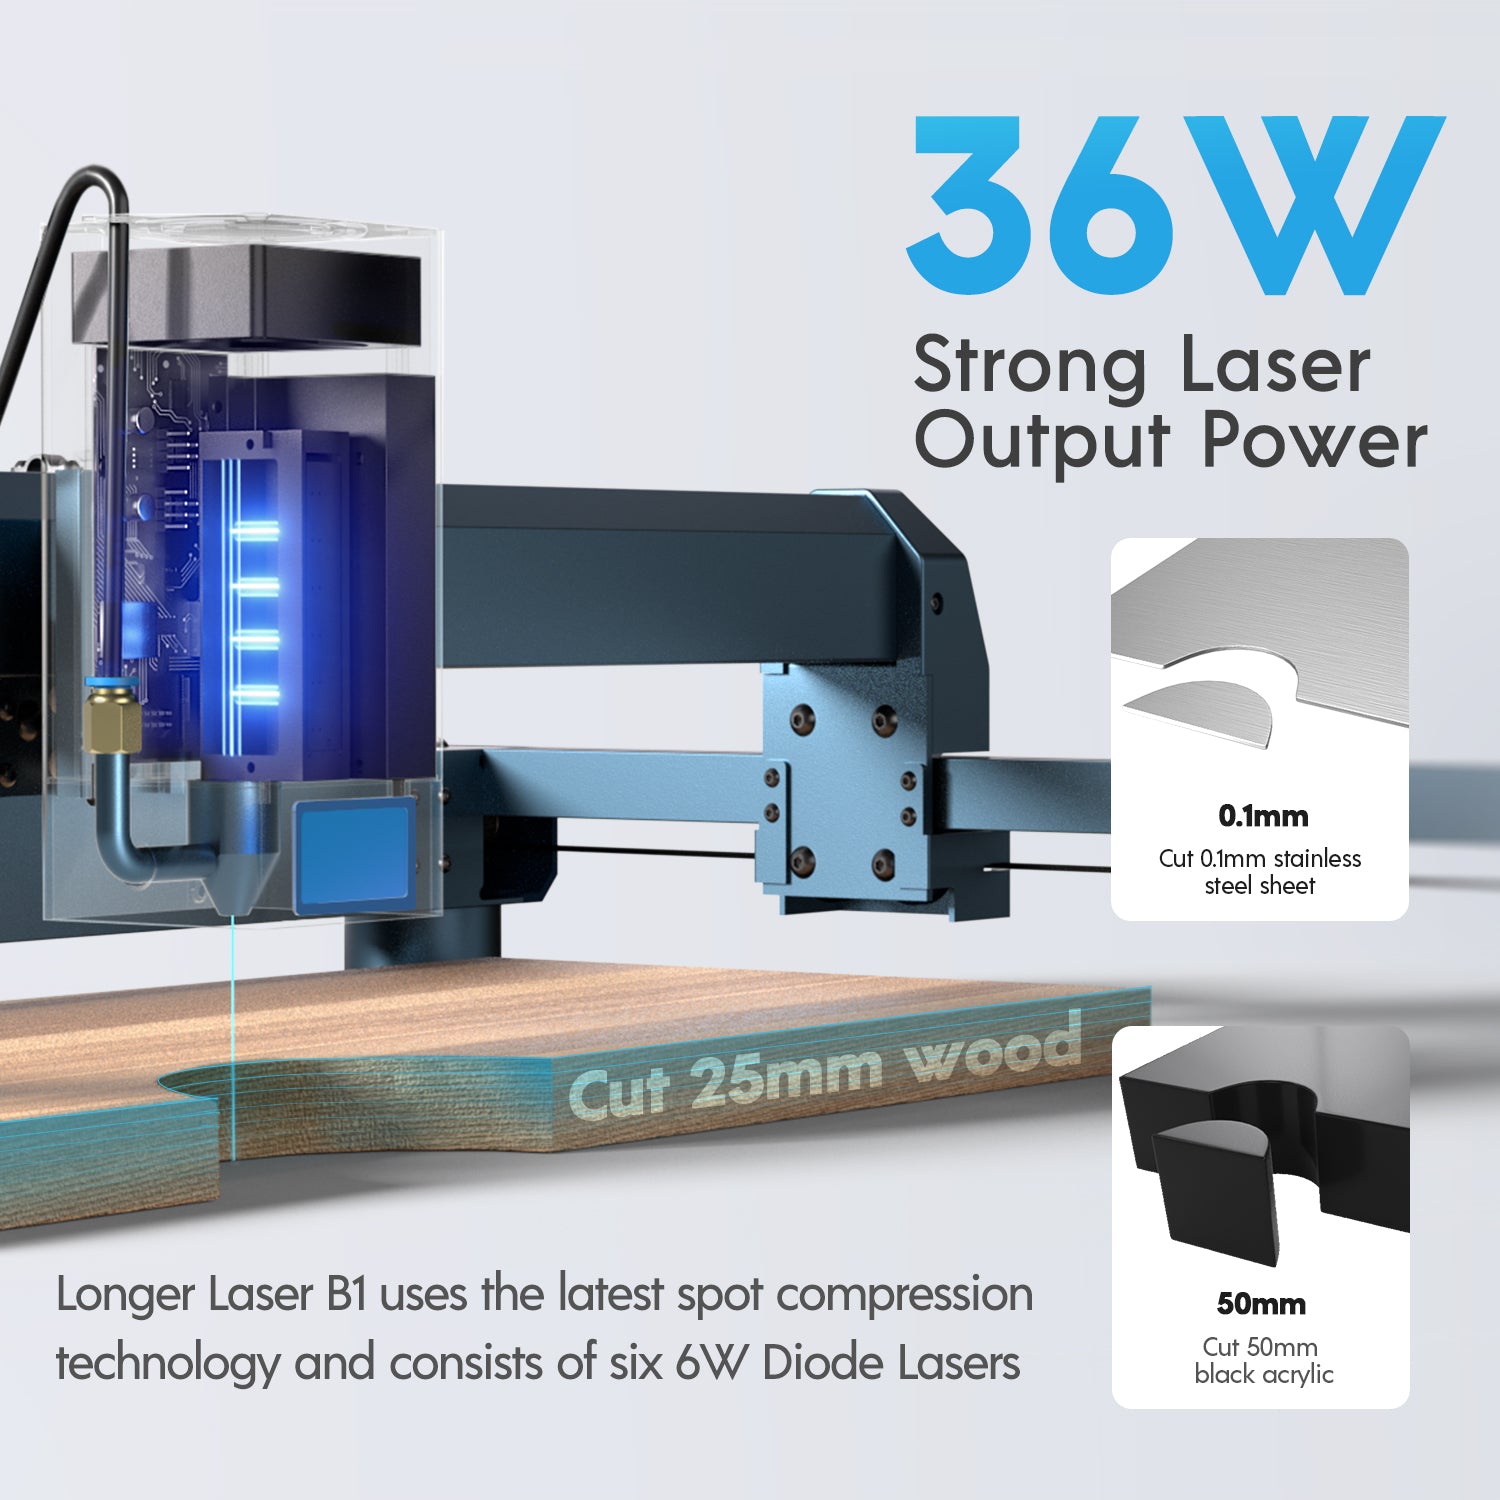 Longer Laser B1 30W (33-36W Output Power)